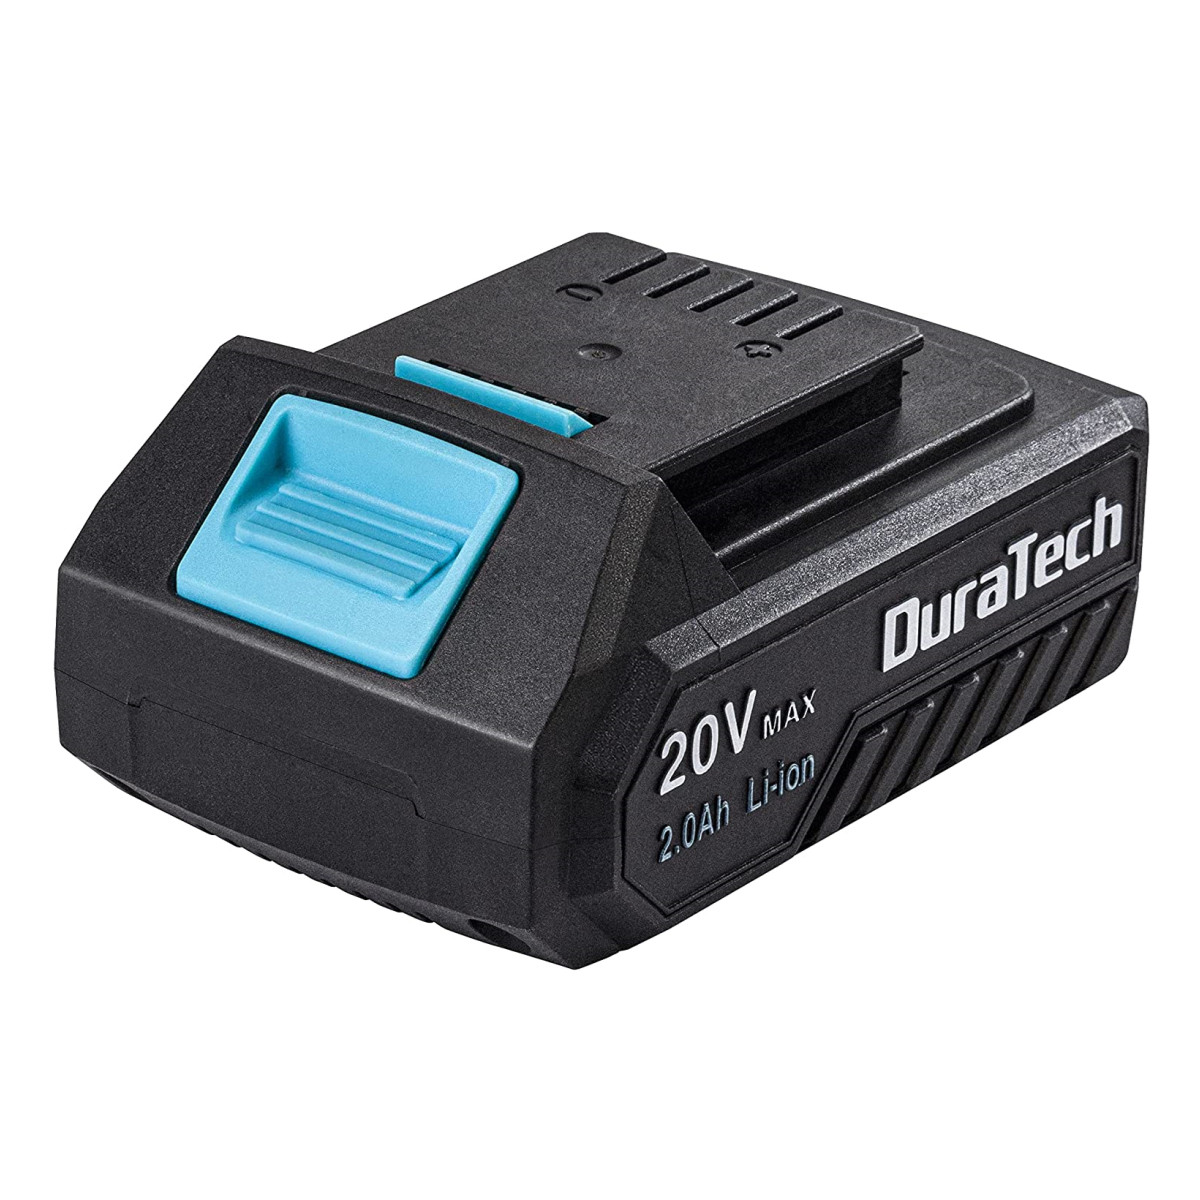 DURATECH 20V 2.0Ah Li-ion Battery Pack